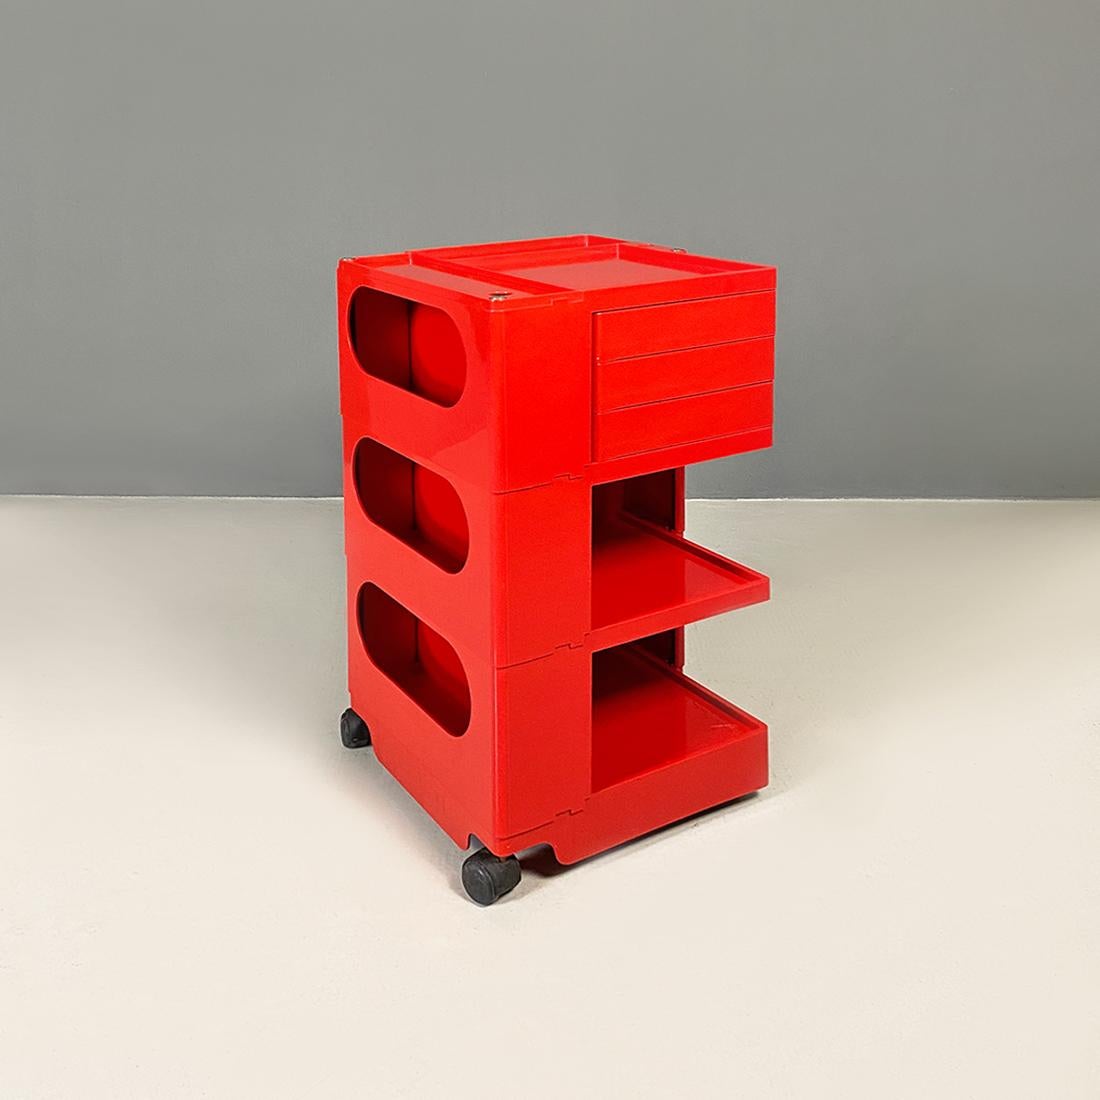 Mid-20th Century Italian Modern Red Plastic Storage Trolley Boby Joe Colombo for Bieffeplast 1968